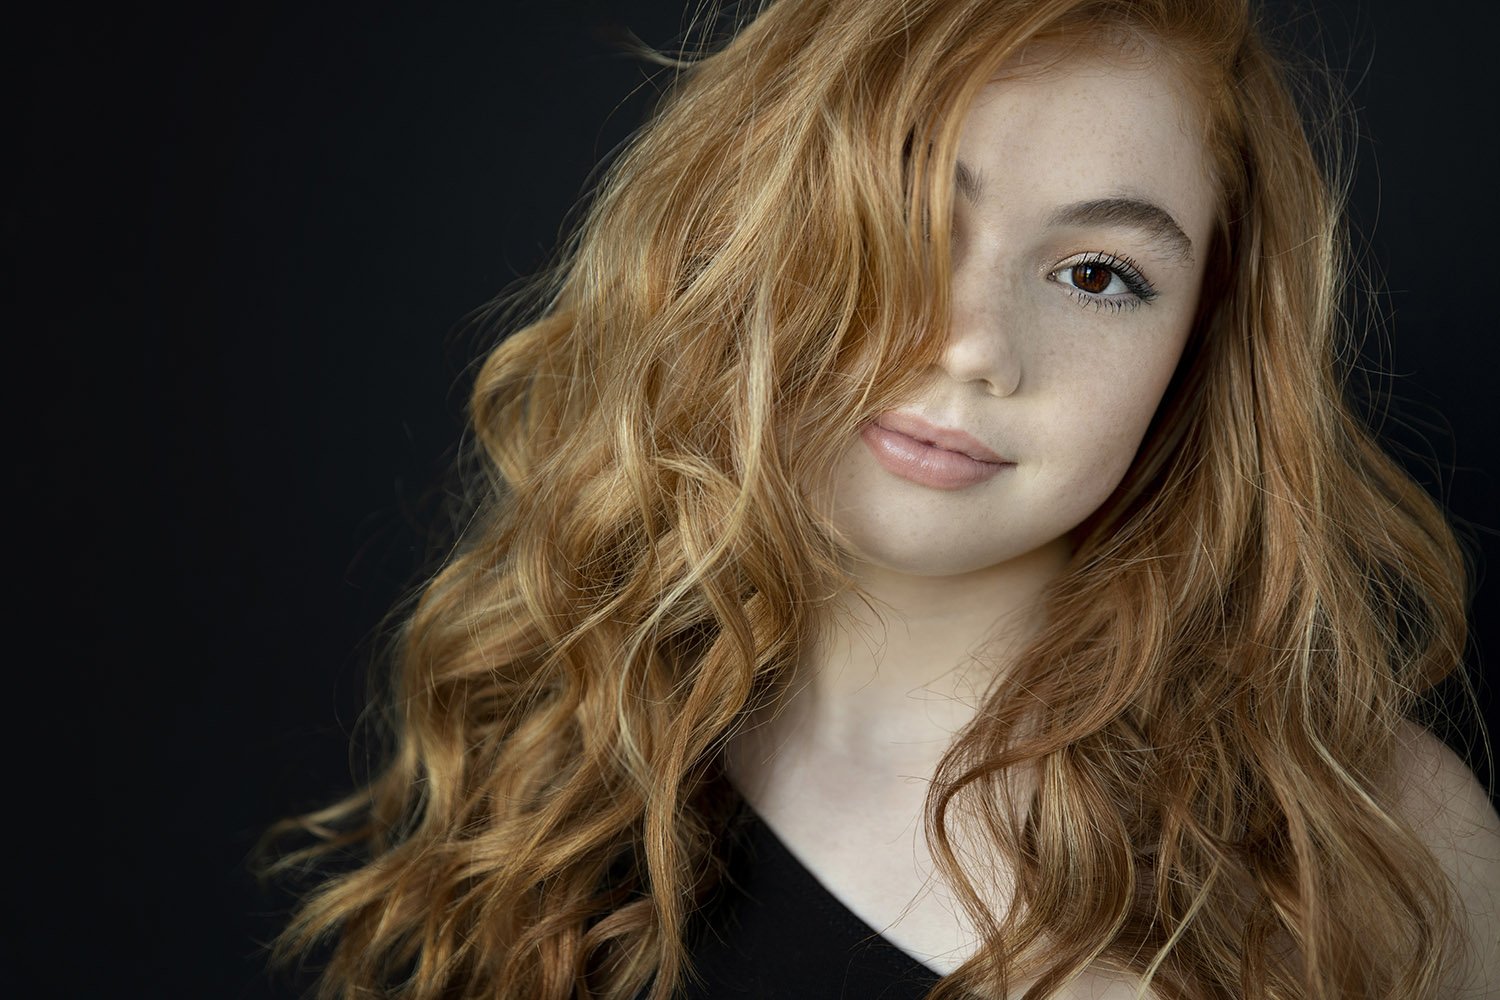 fotoshoot tiener model met rood haar.jpg